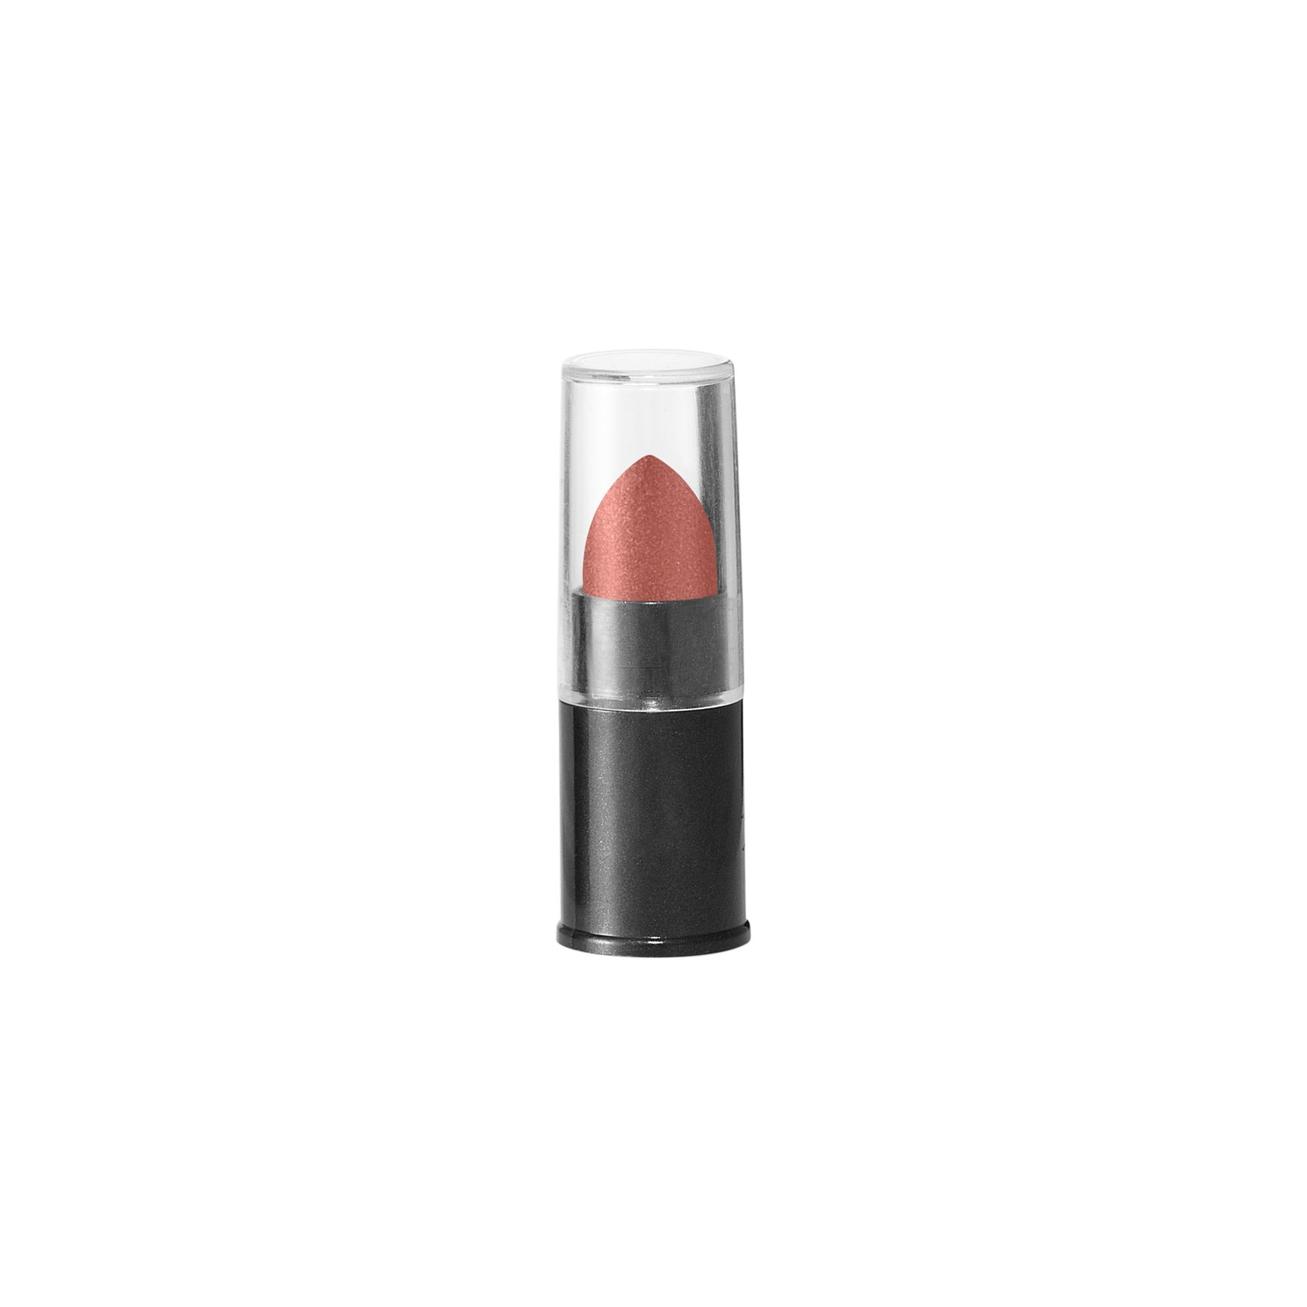 Smart Sync Lipstick Sampler för 5 kr på Oriflame